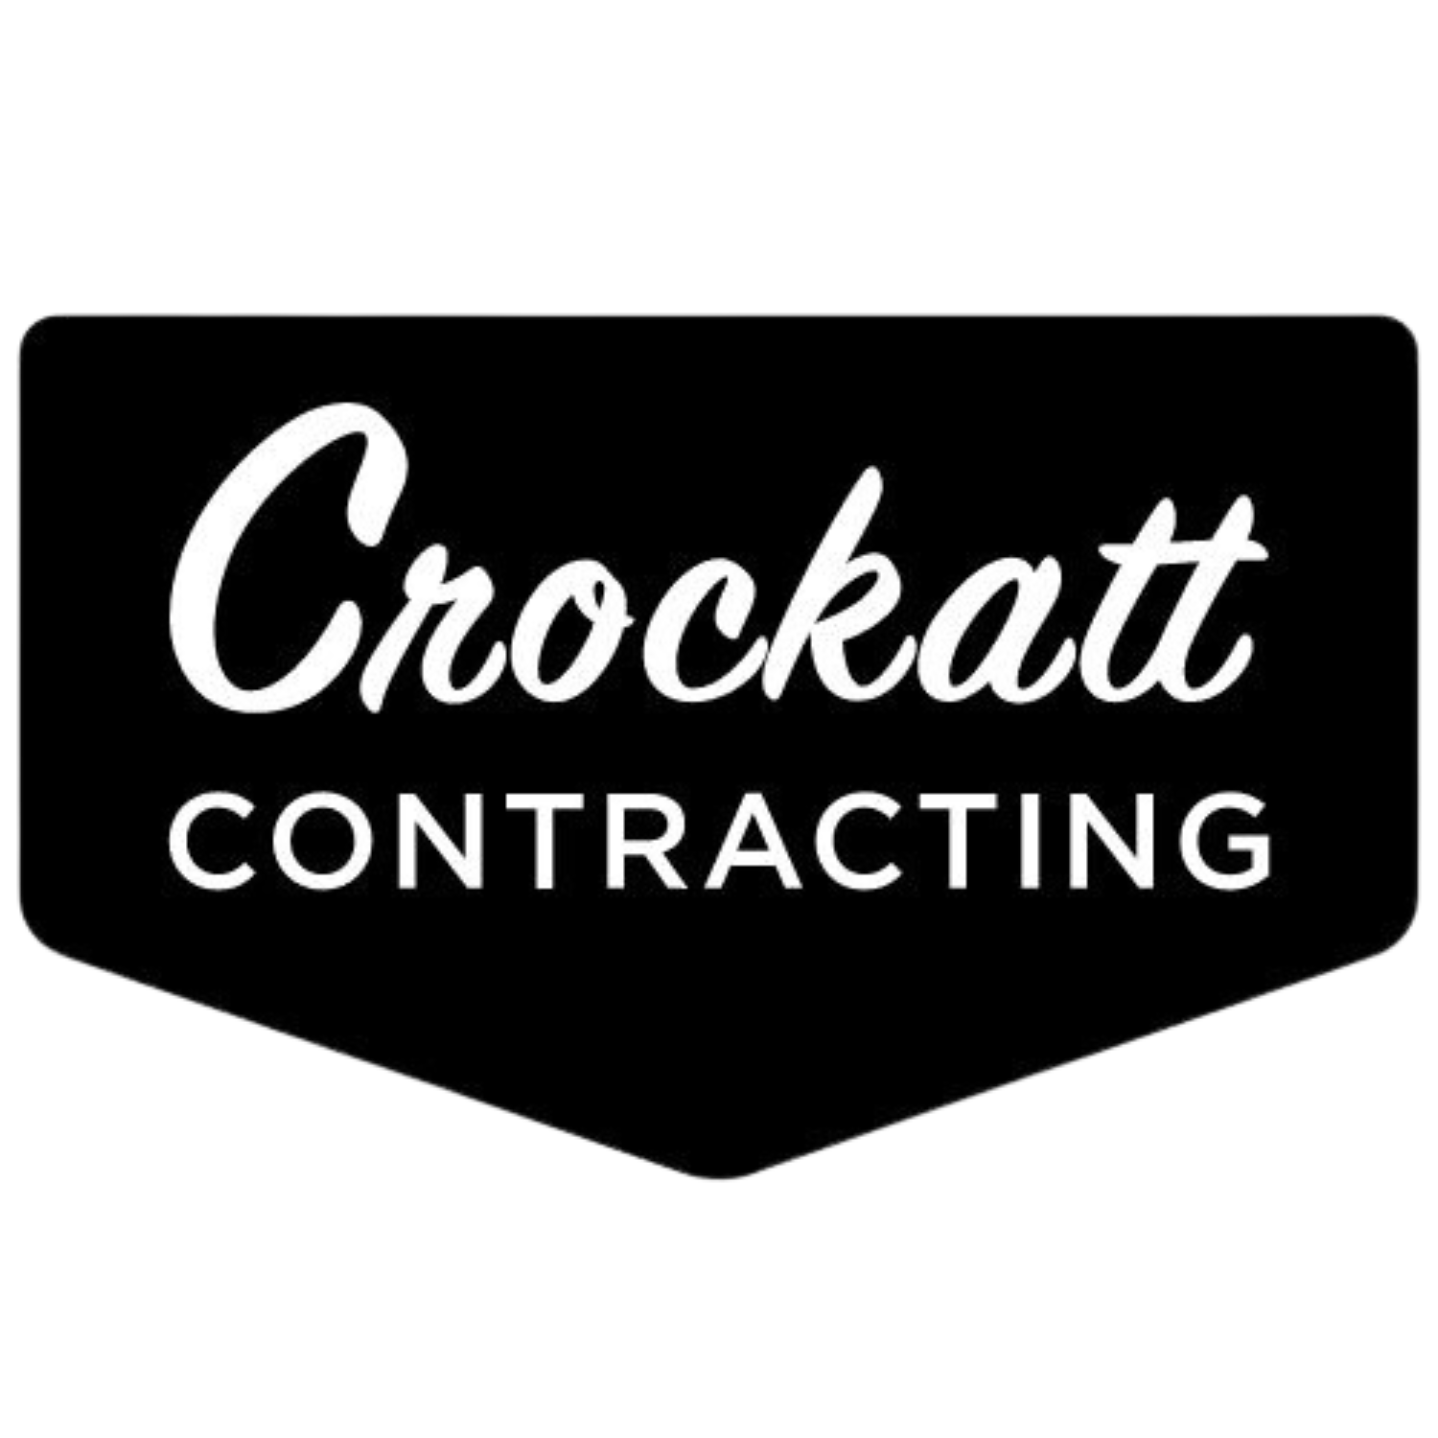 Crockatt Contracting